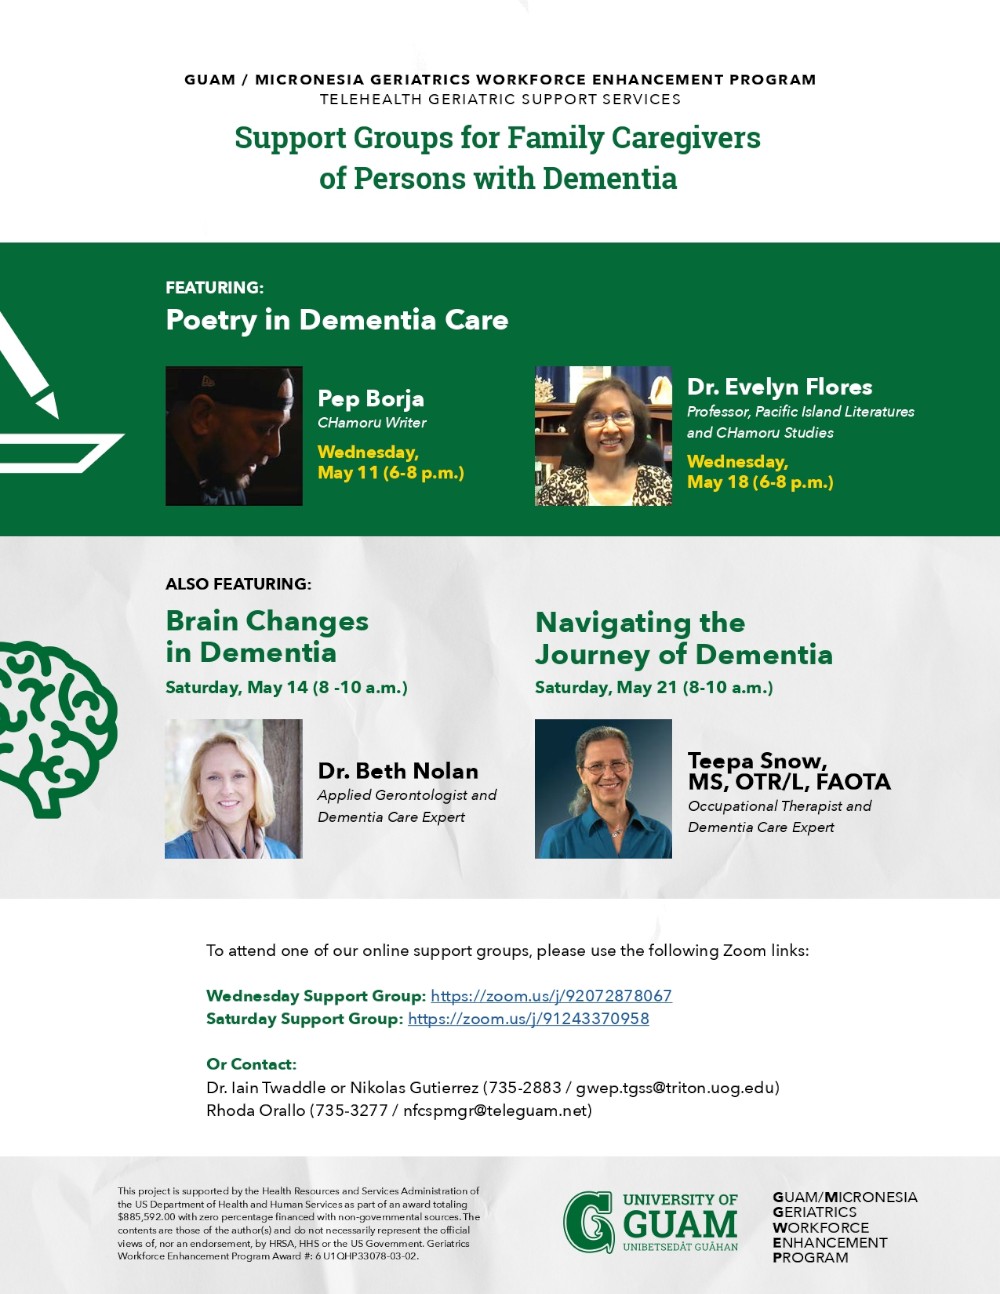 Brain Changes in Dementia with Dr. Beth Nolan